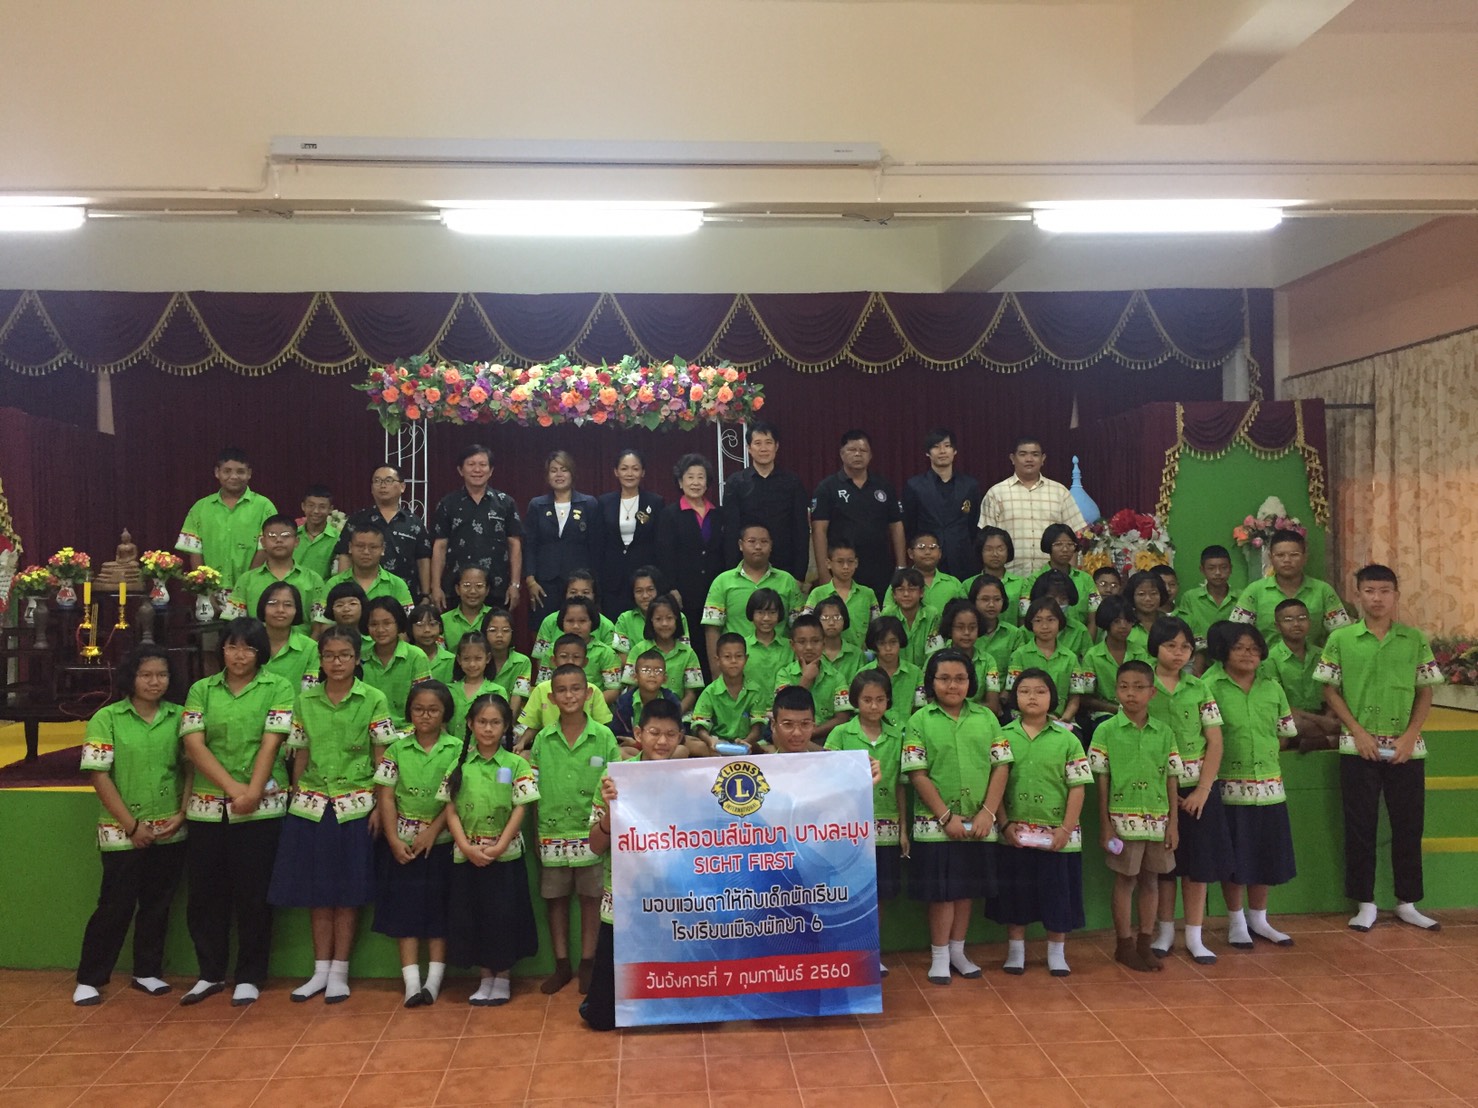 The Lions Club of Pattaya-Banglamung donated nearly 100 pairs of eyeglasses to needy children at Pattaya School No. 6.